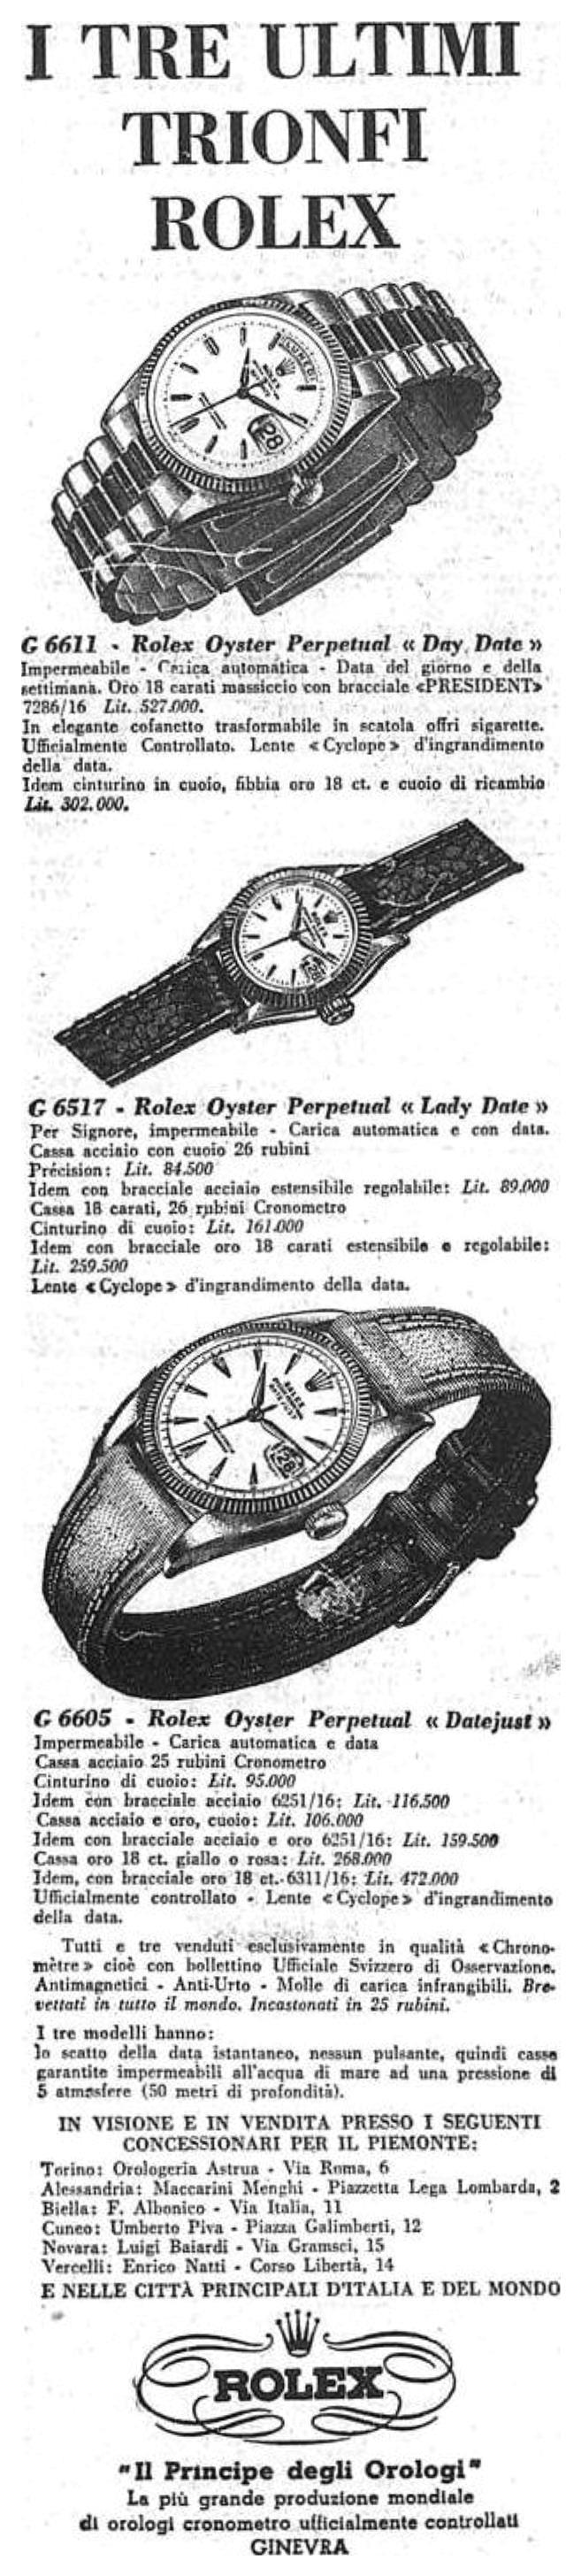 Rolex 1957 25.jpg